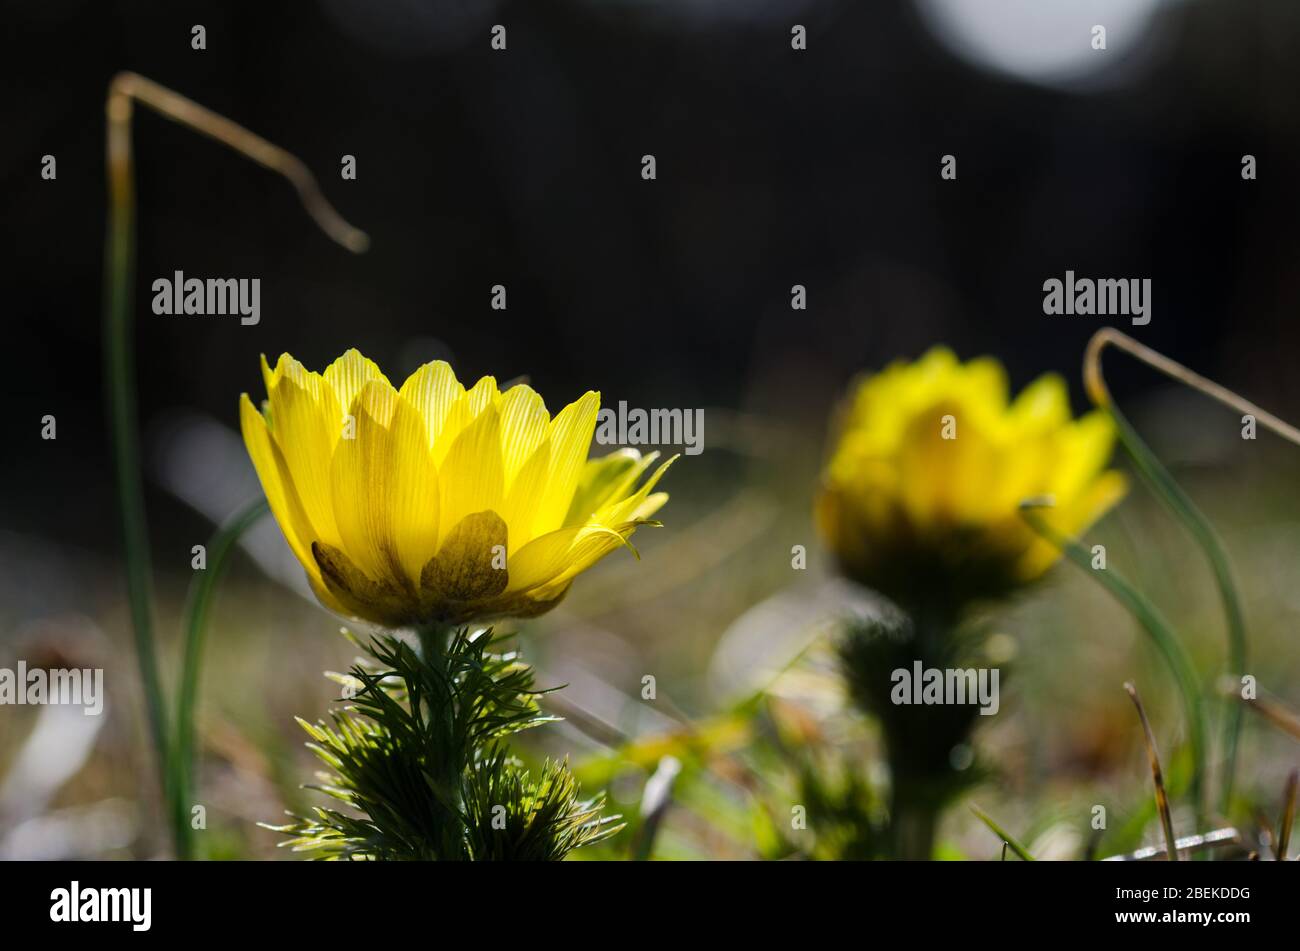 Yellow flower head closeup by a dark background Stock Photo